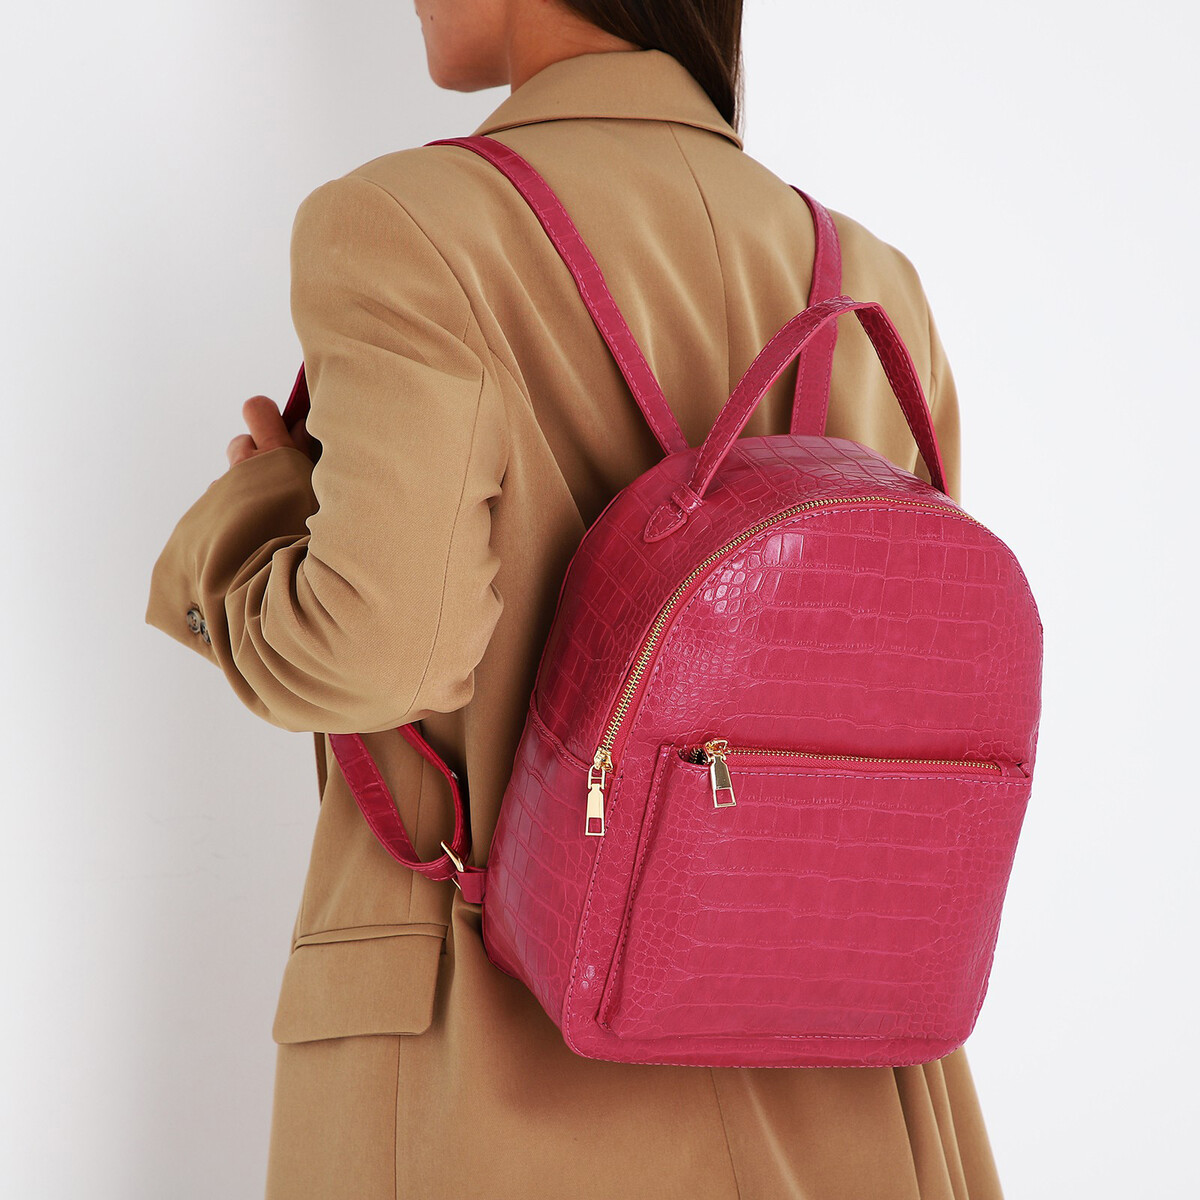 Рюкзак женский из искусственной кожи на молнии, 1 карман, цвет фуксия рюкзак на молнии наружный карман фуксия